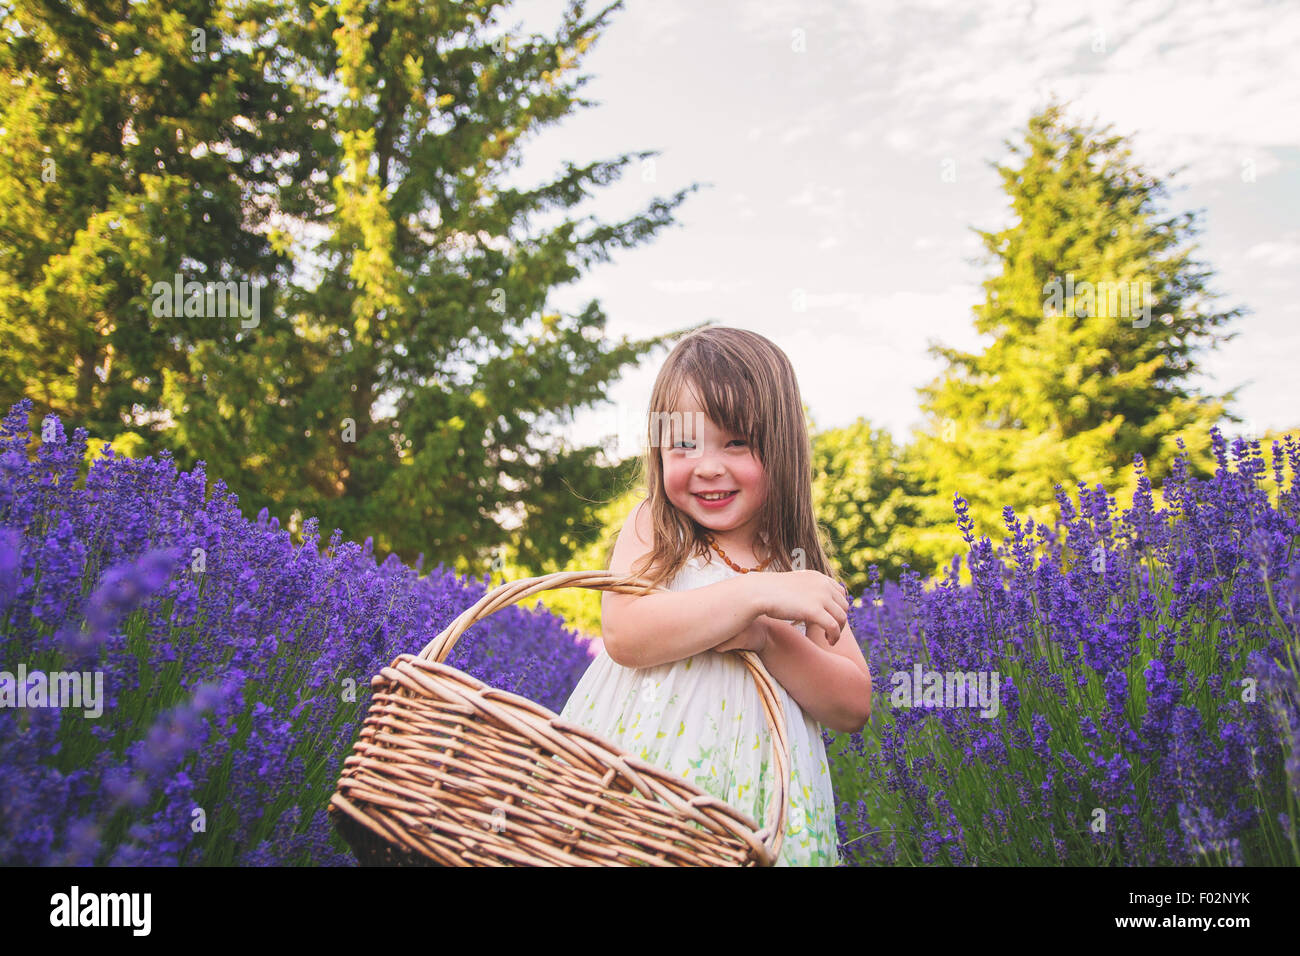 Girl holding basket in lavender field Stock Photo